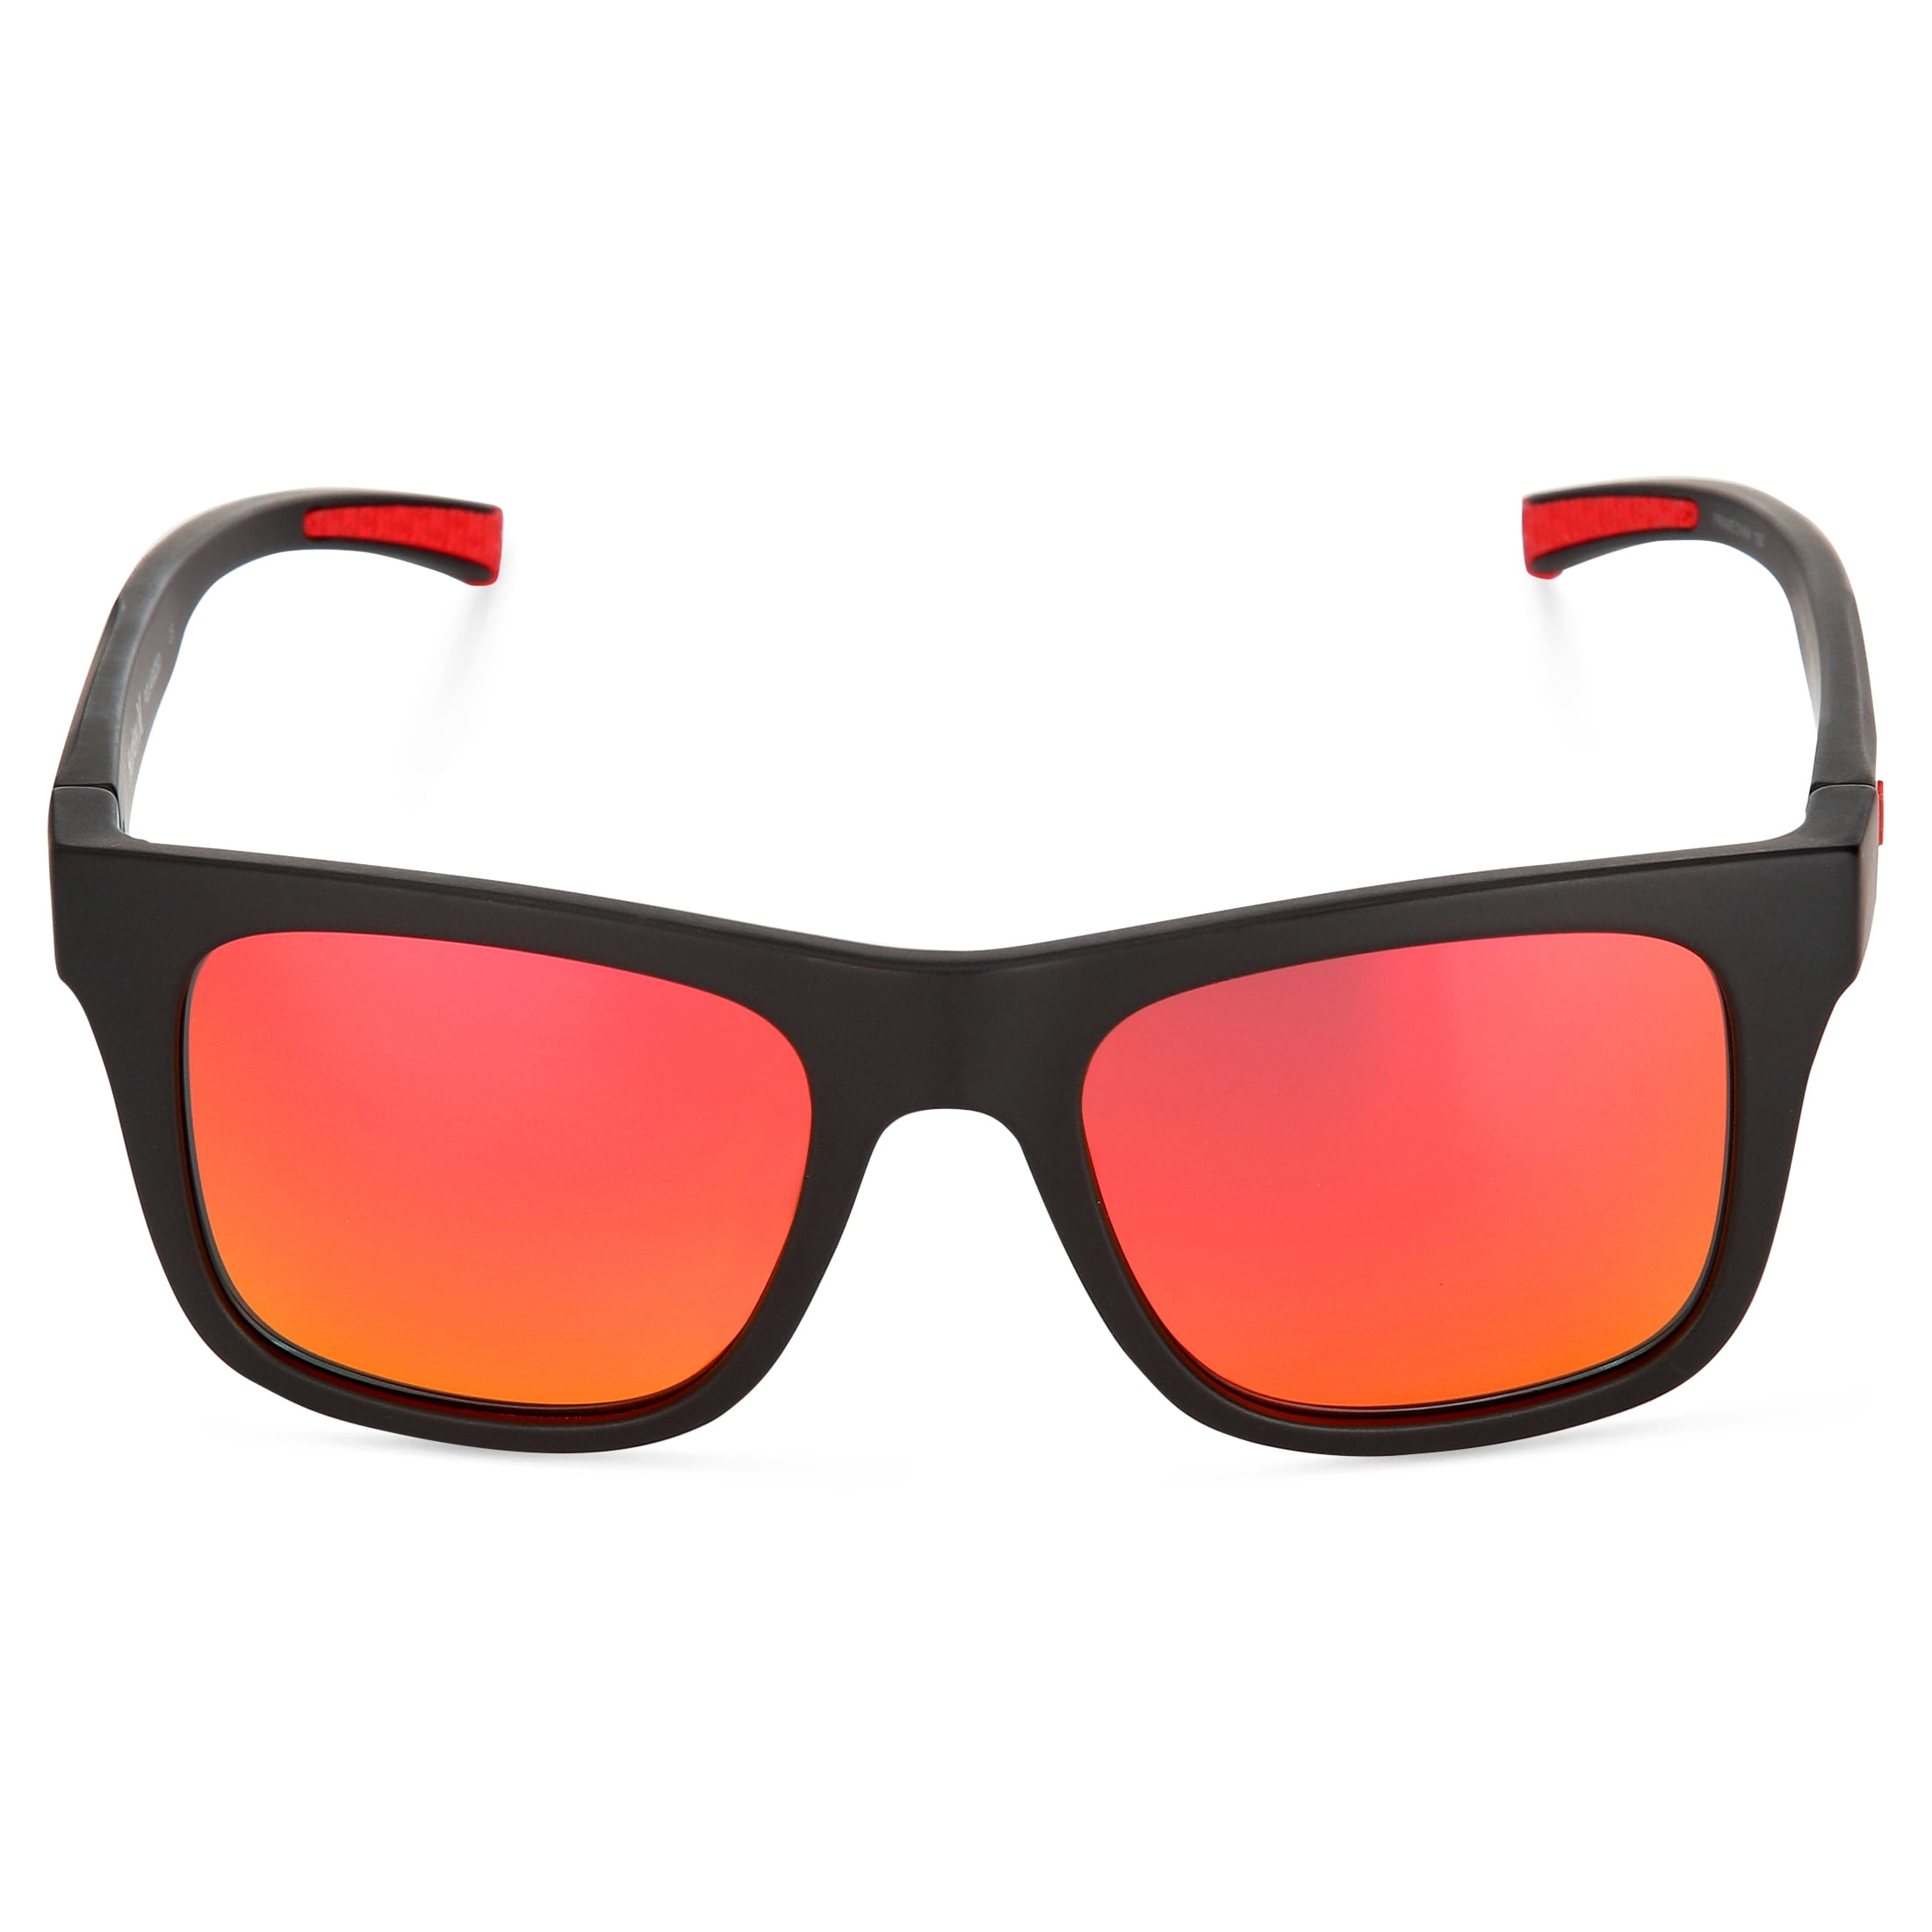 Hurley Men\'s Rx\'able Sport Sunglasses, Sunrise, 53-20-140, Polarized w/ Blk/Red, HSM3000P, Case